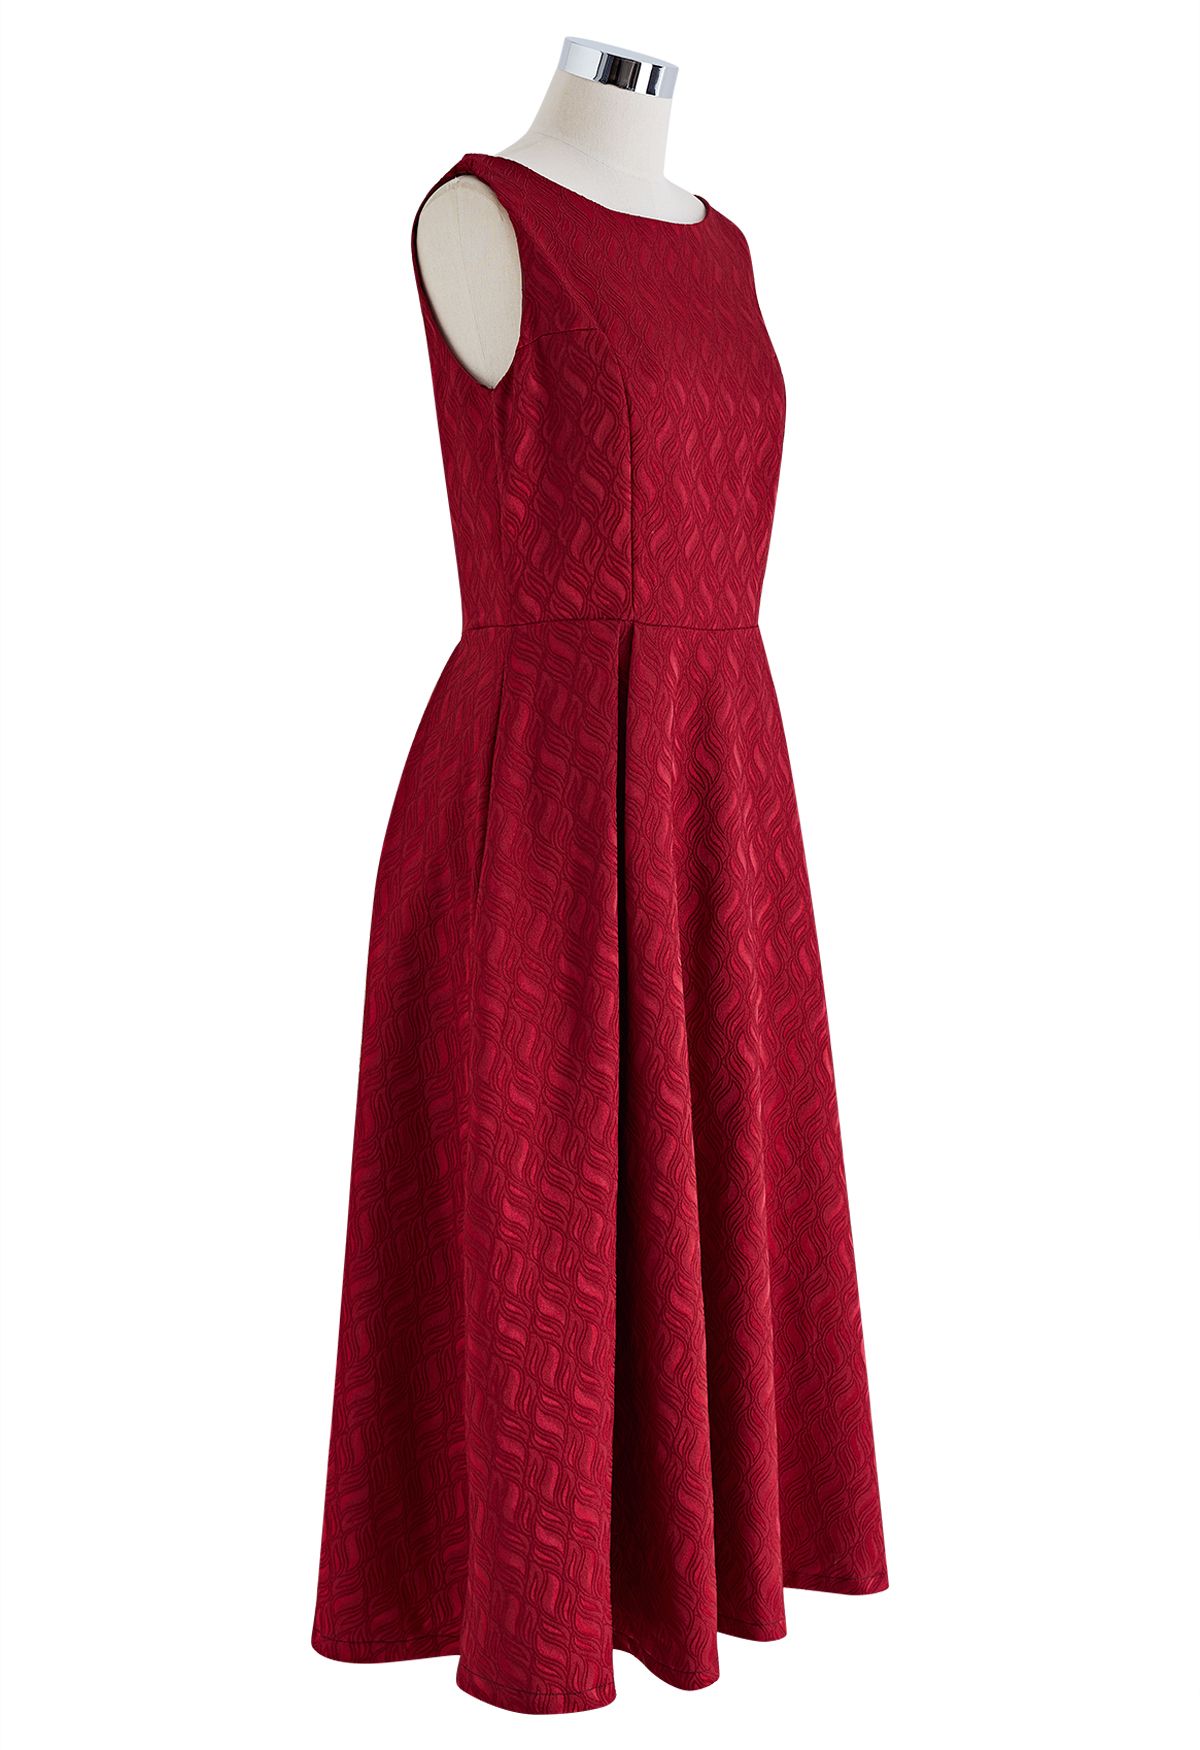 Embossed Jacquard Texture Sleeveless Dress